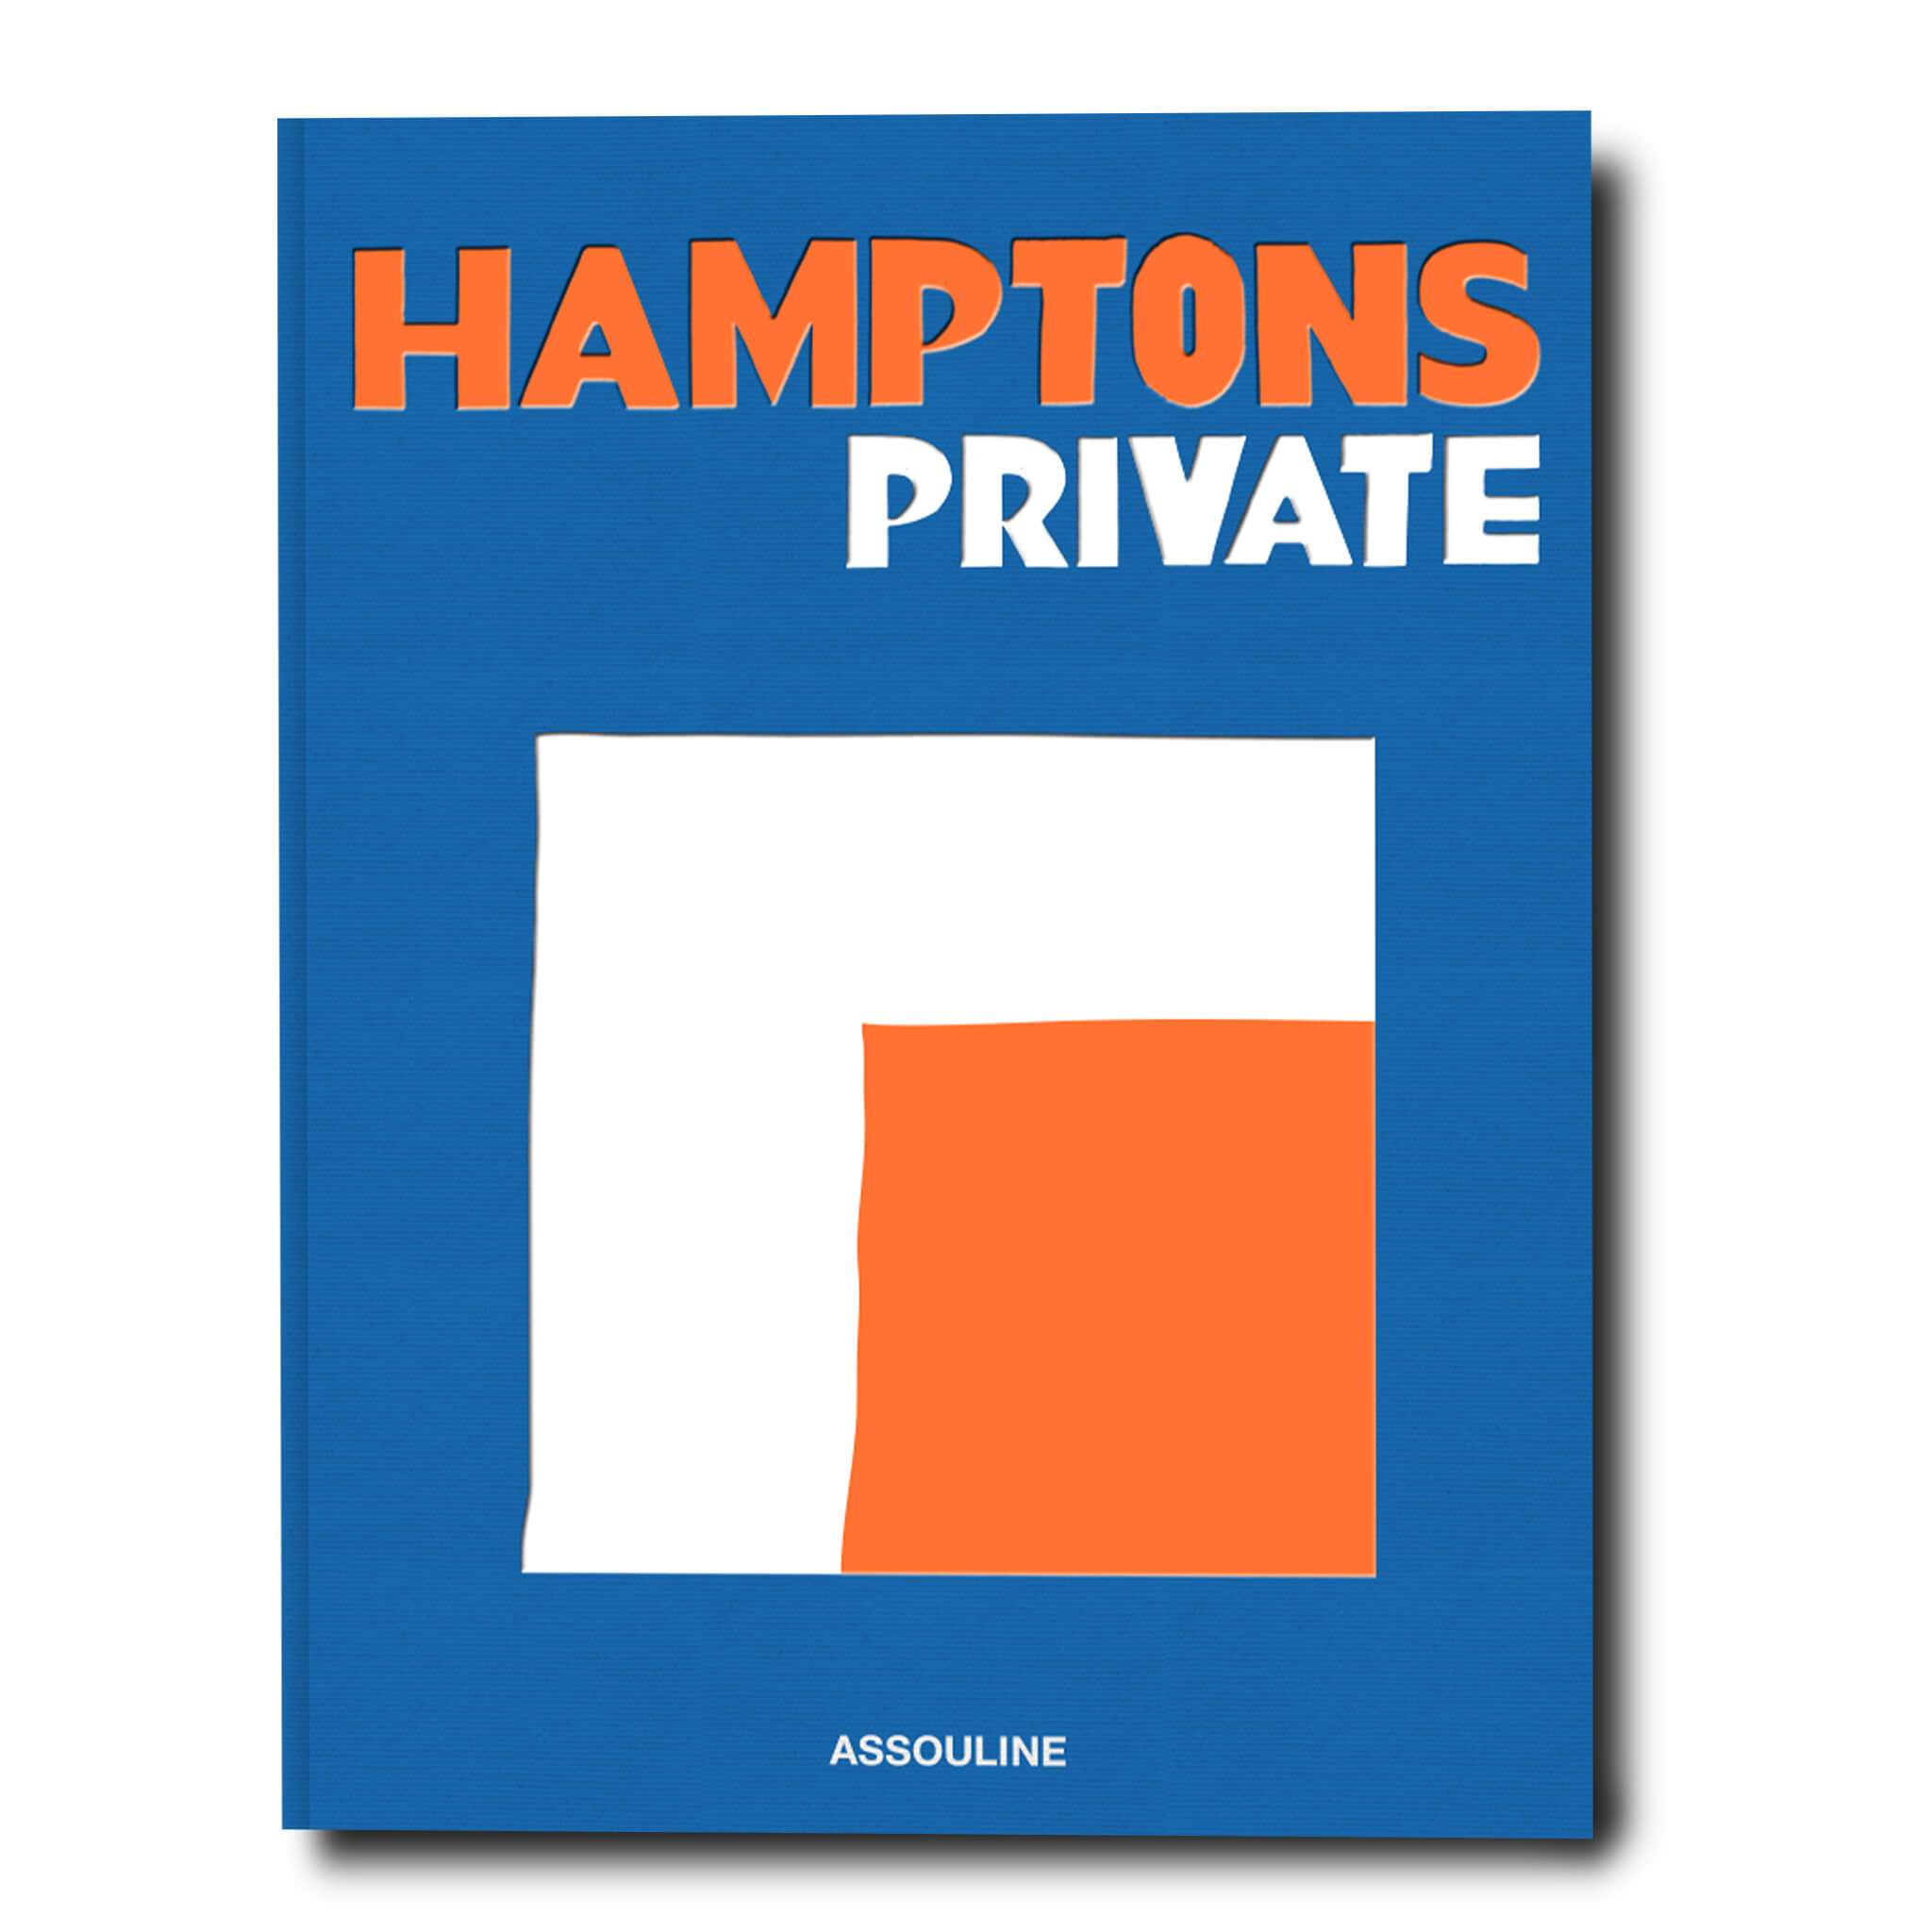 Hamptons A ddee493f d9f4 46d5 997c